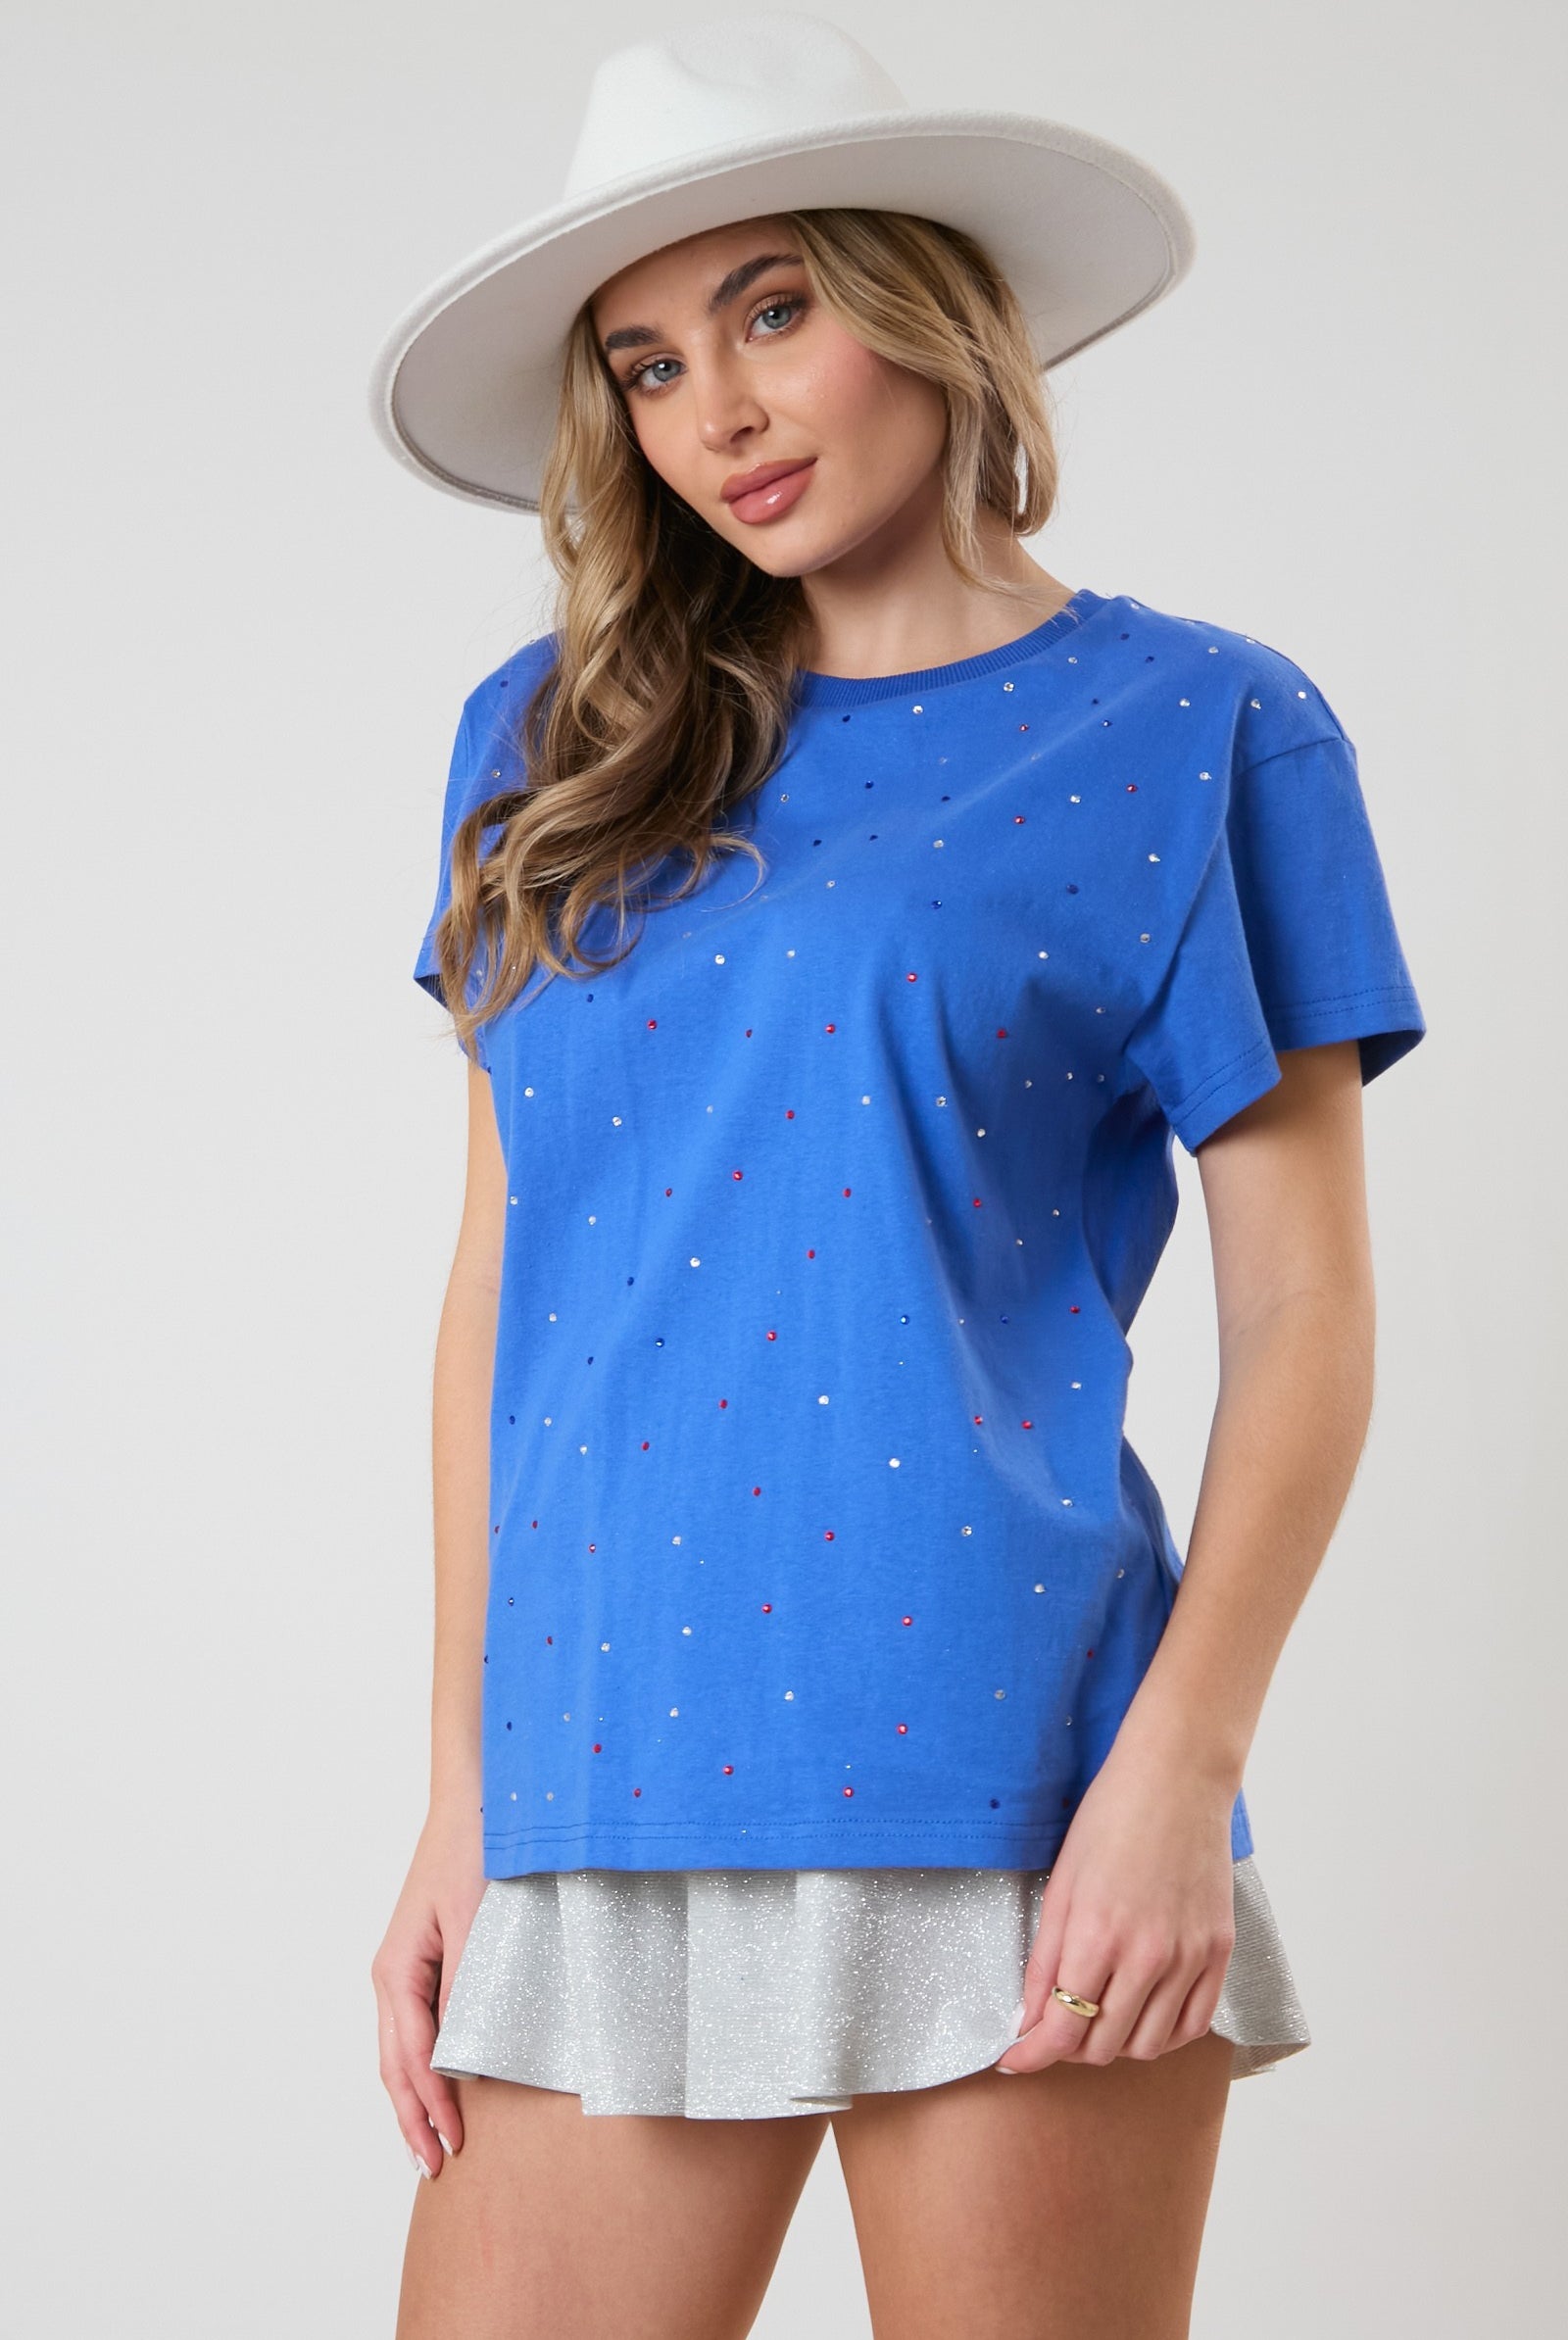 Rosemary Royal Blue Multi Color Rhinestone Embellished T Shirt - Be You Boutique